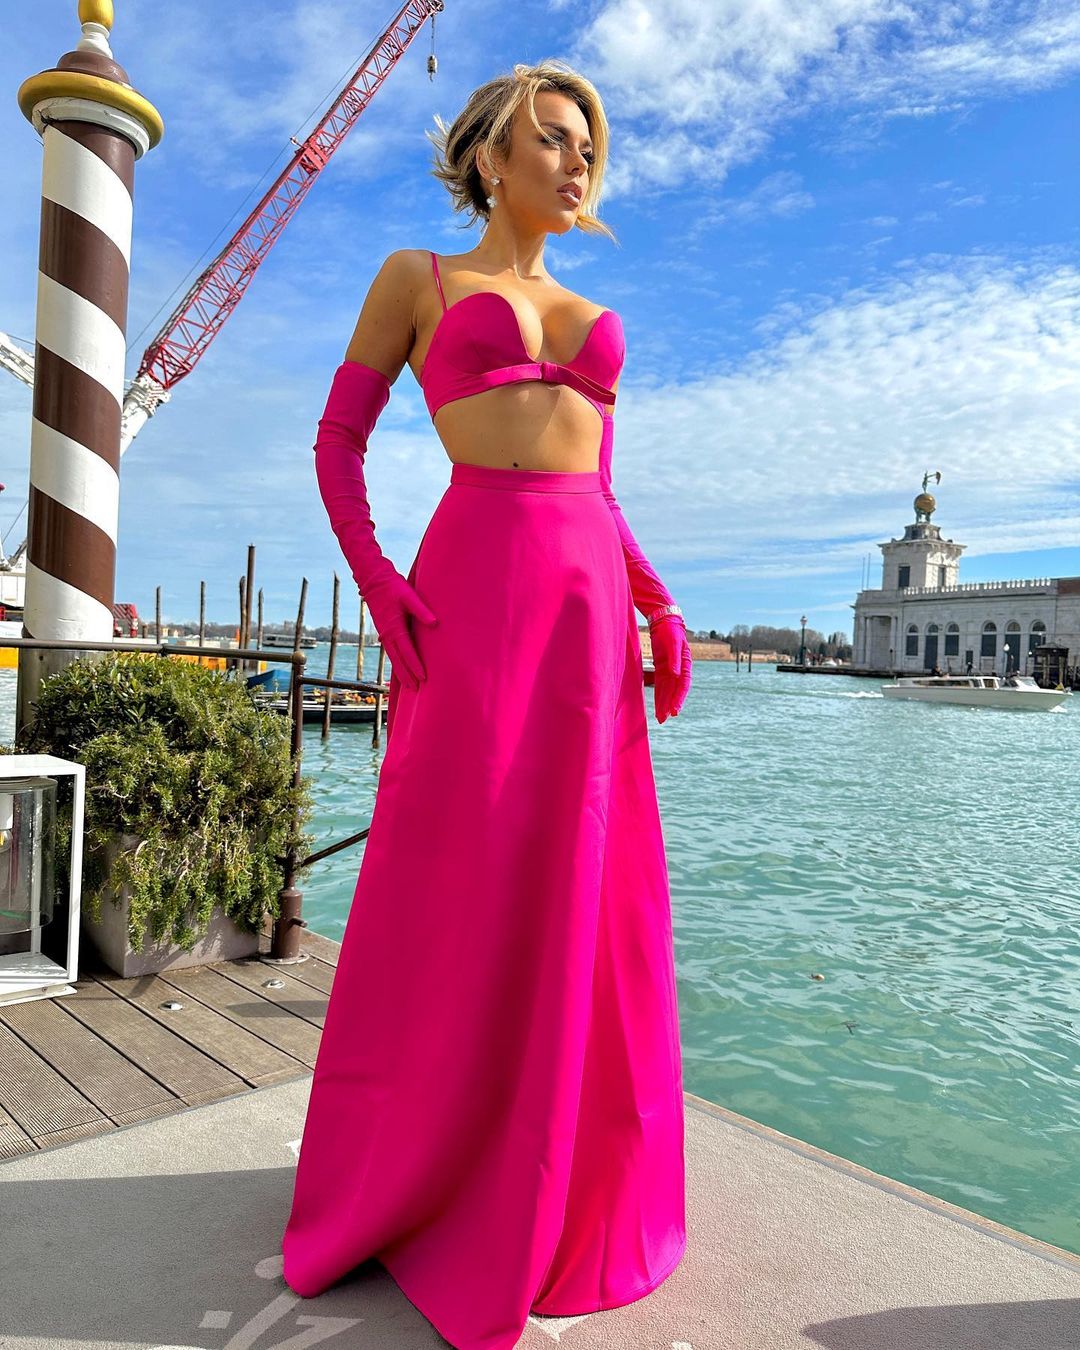 Tallia Storm show her toned figure in Pink Dress at Palazzo Albrizzi - Capello, Venice, Mar 2023